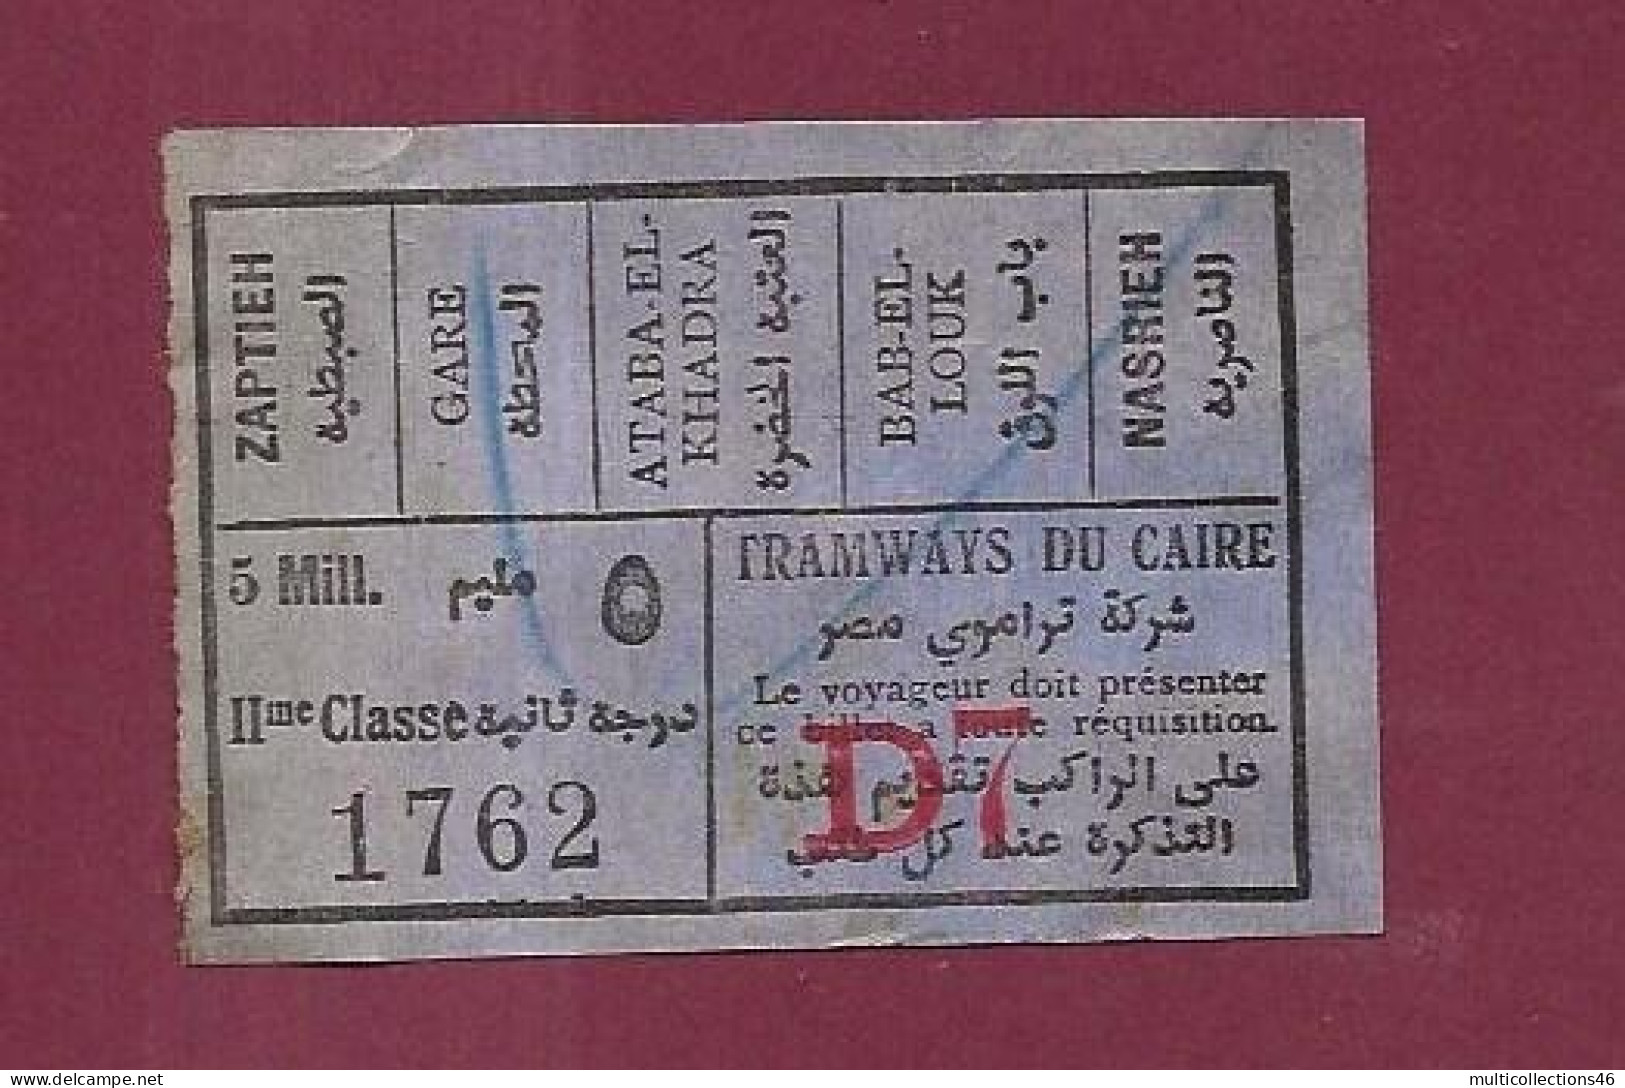 281223 - TICKET CHEMIN DE FER TRAM METRO - EGYPTE TRAMWAYS DU CAIRE 5 Mill. IIème Classe 1762 D7 ZAPTIEH MASRIEH - Monde